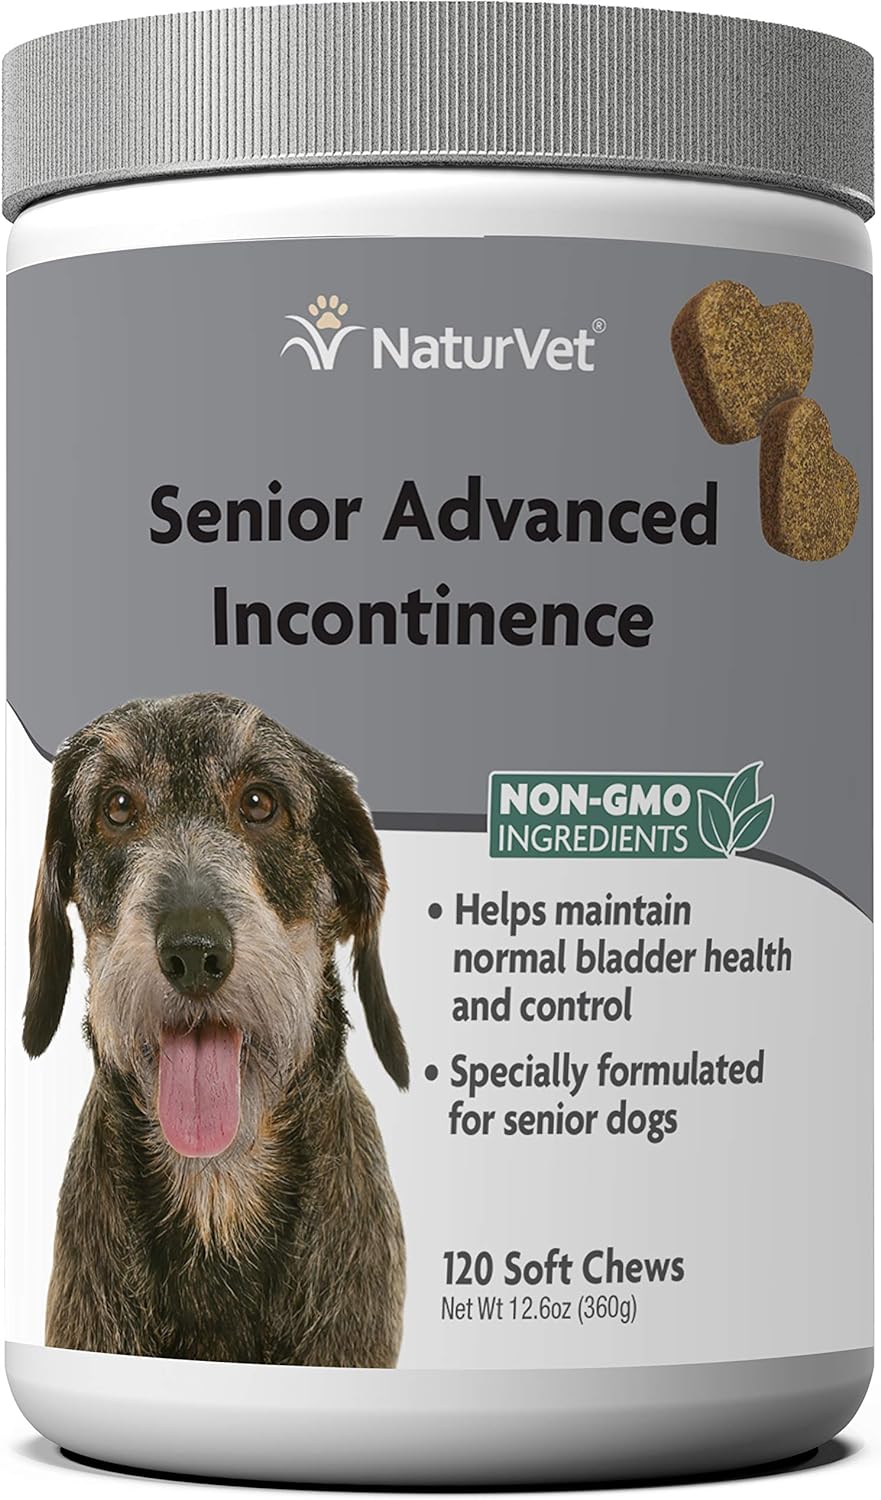 NaturVet Senior Advanced Incontinence Dog Supplement – Helps Support Dog’s Bladder Control, Normal Urination – Includes Synergistic Blend of Botanicals – 120 Ct. Soft Chews